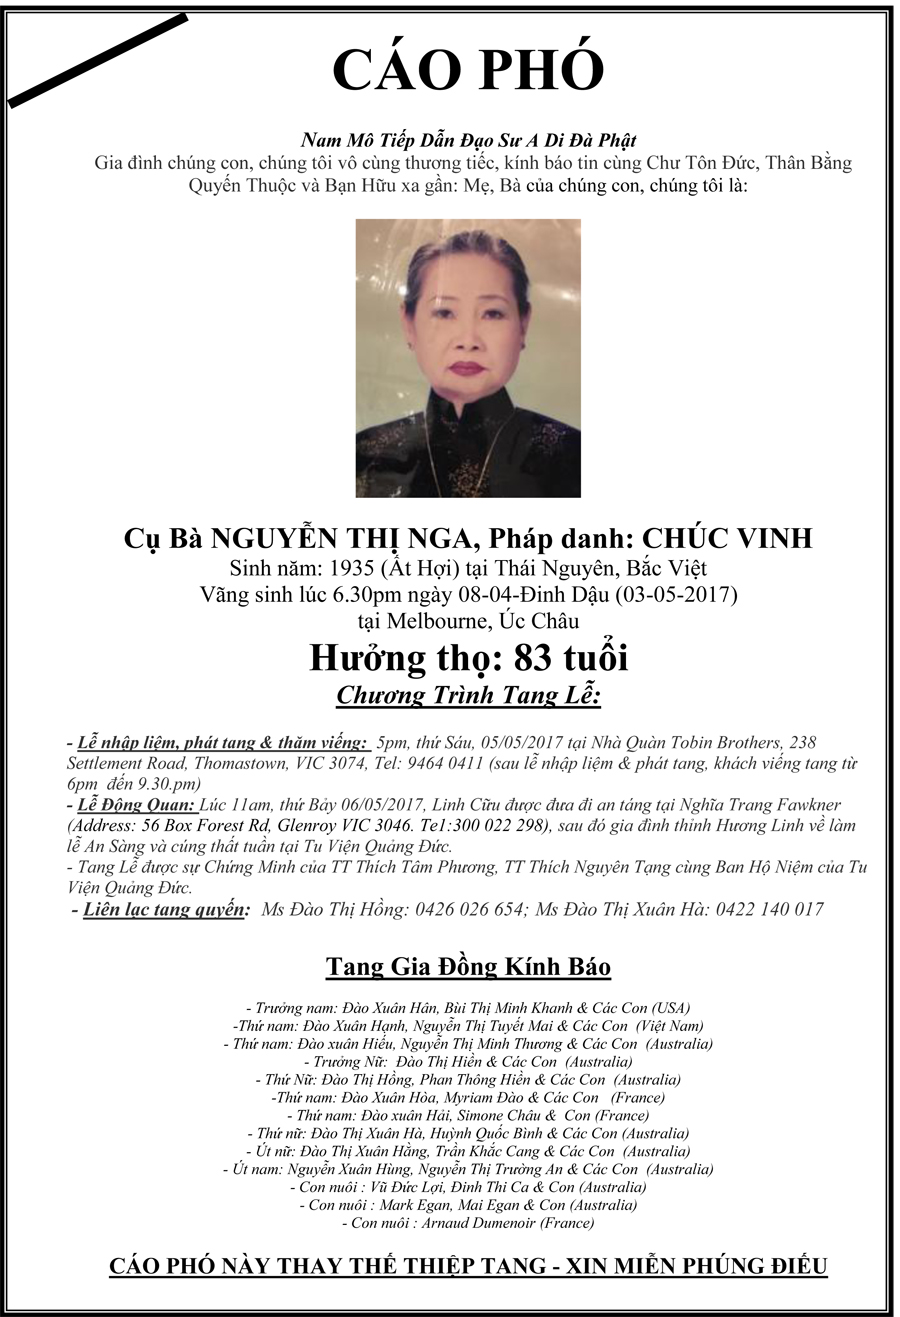 Cao Pho Tang Le Phat tu Nguyen Thi Nga_Chuc Vinh-1935-2017